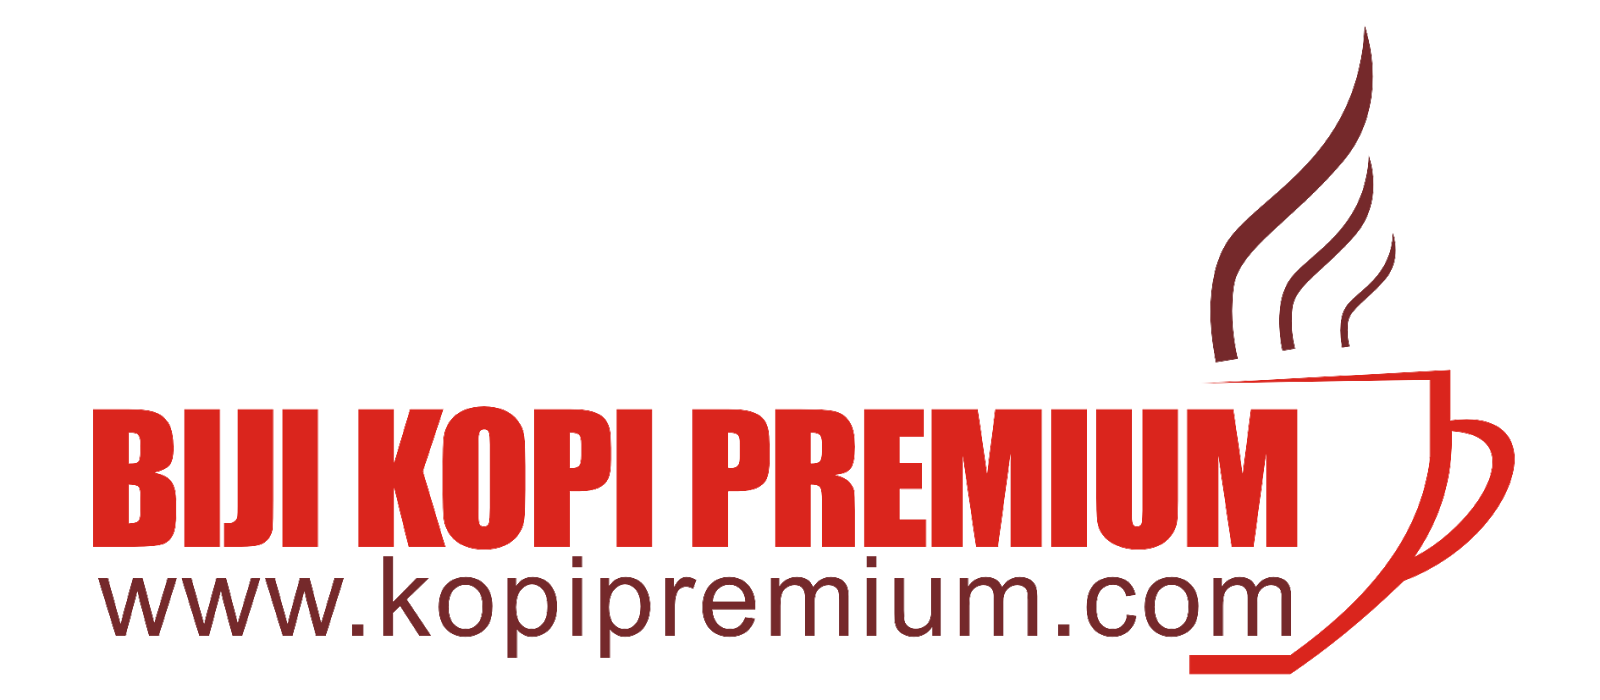 BIKO Kopi Premium Asli Indonesia